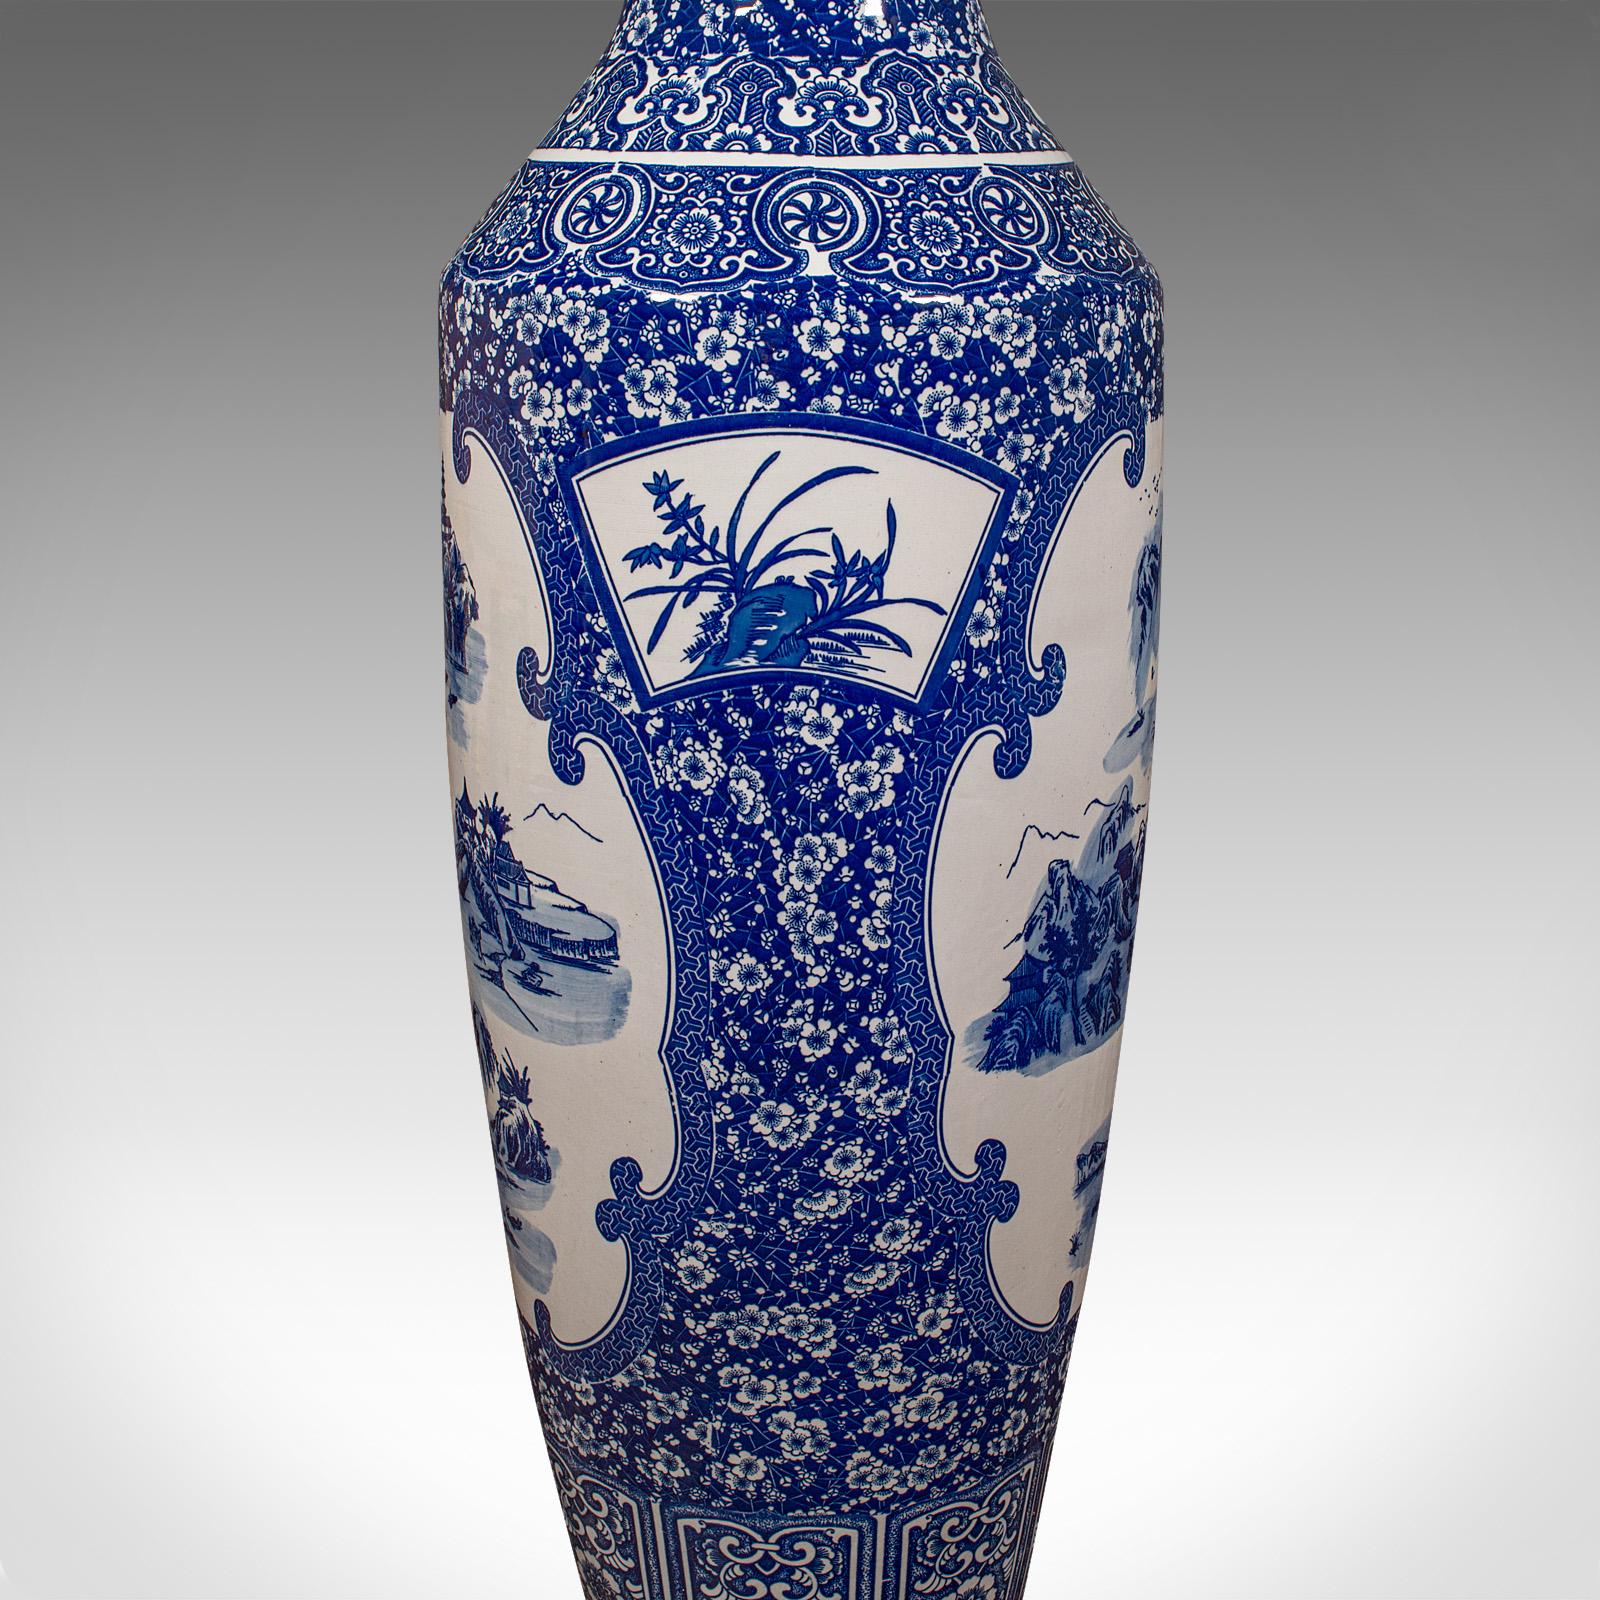 4' Tall Vintage Floor Vase, Chinese, Blue & White, Ceramic, Display, Art Deco For Sale 5